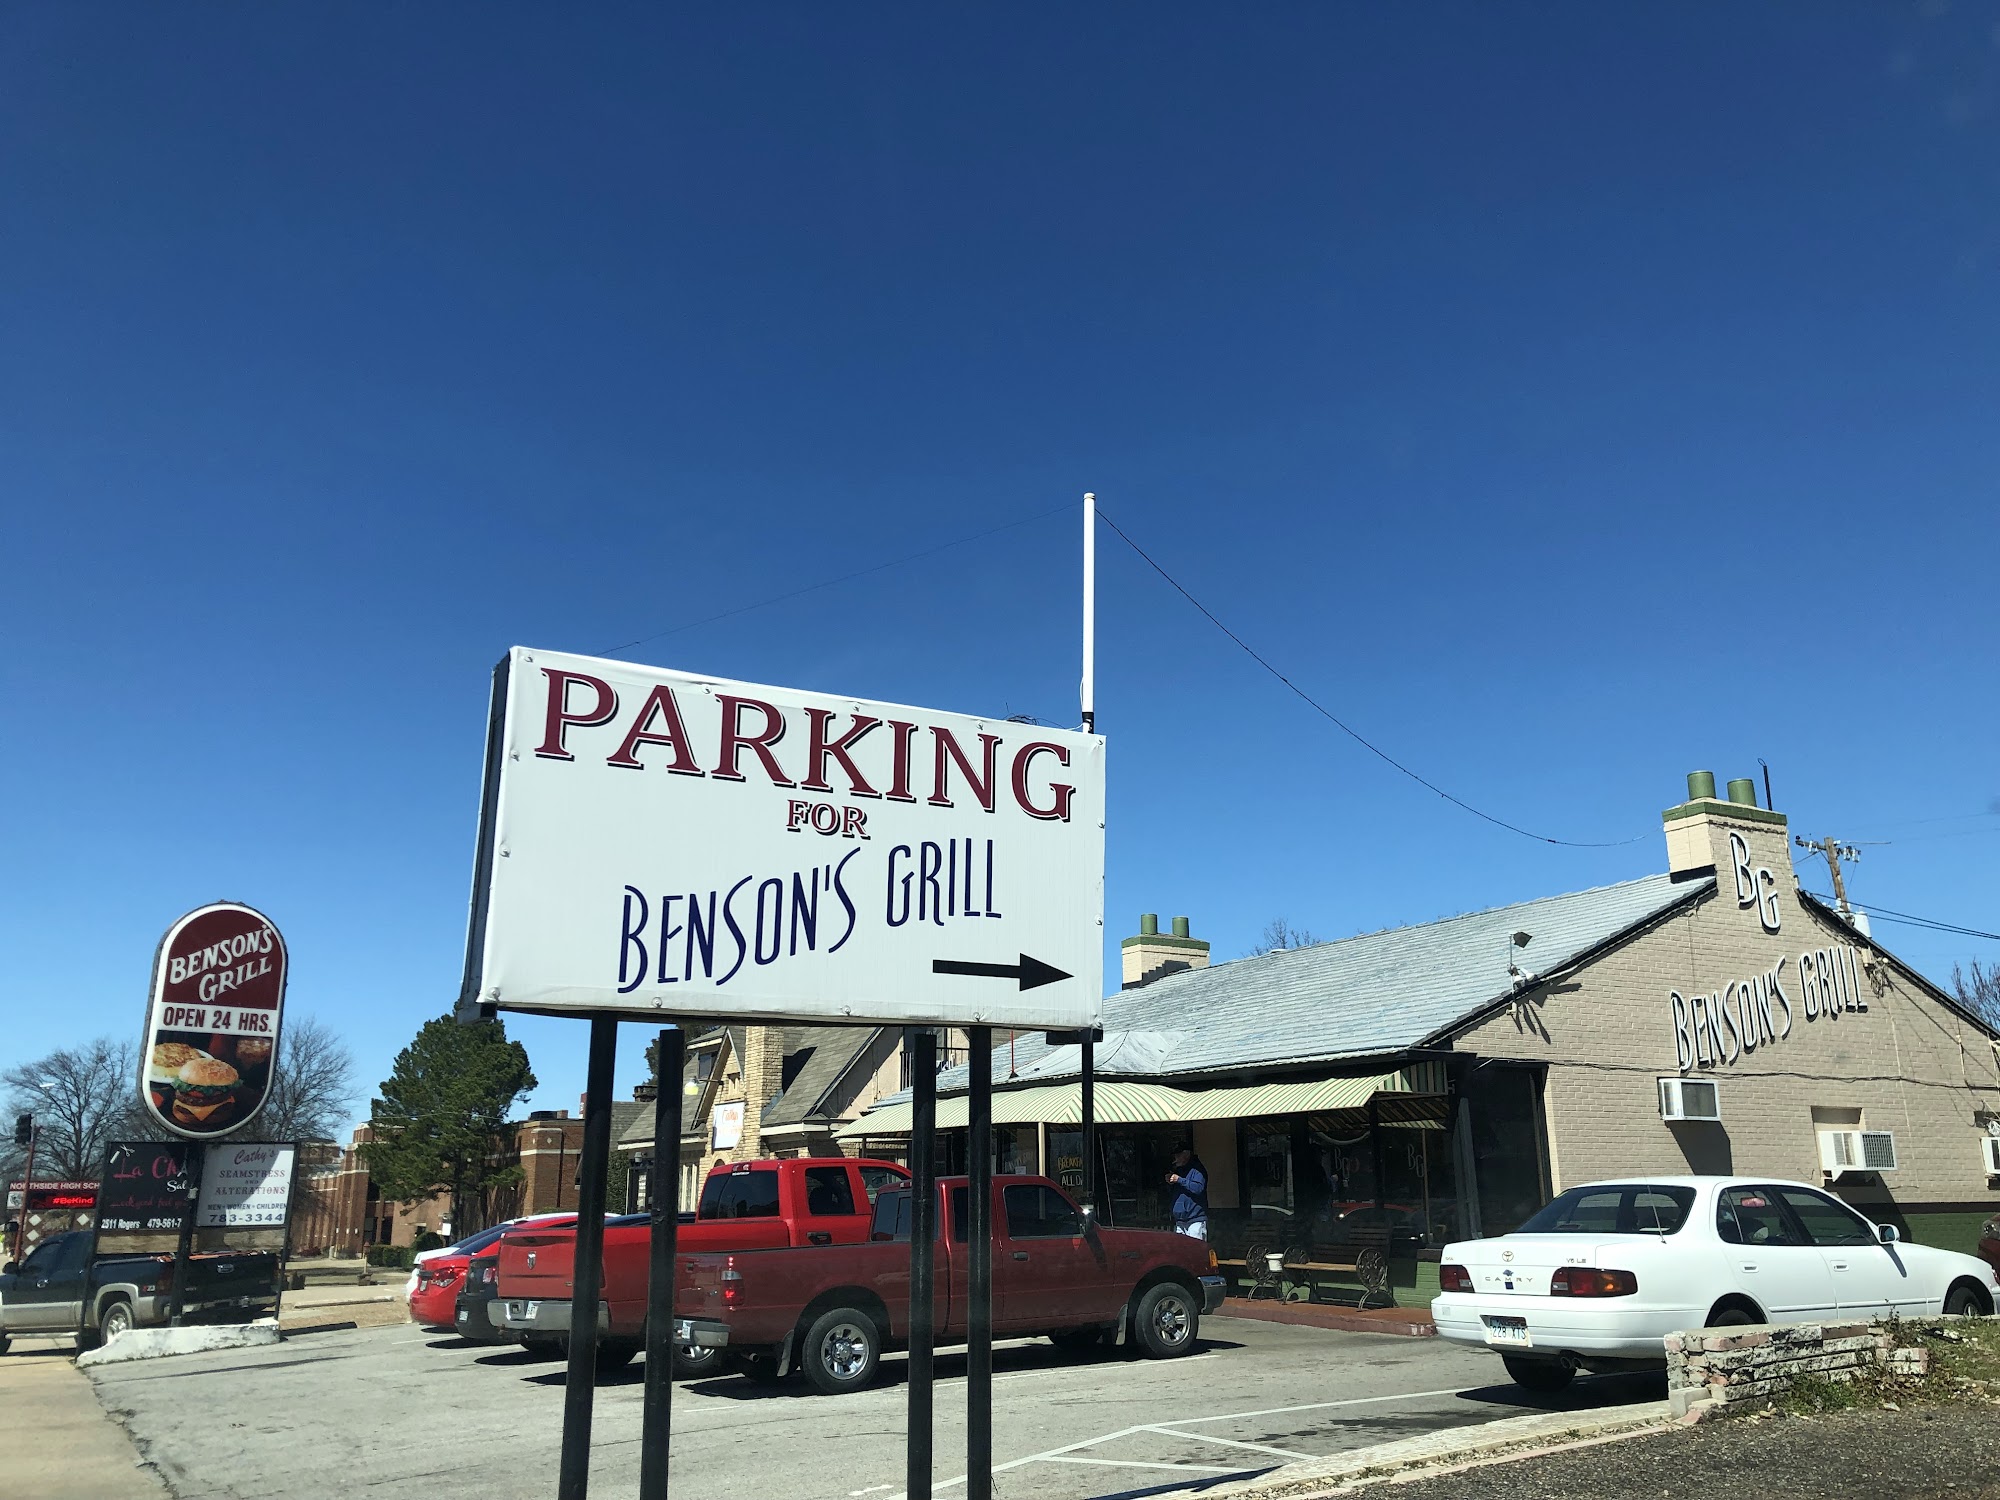 Benson's Grill